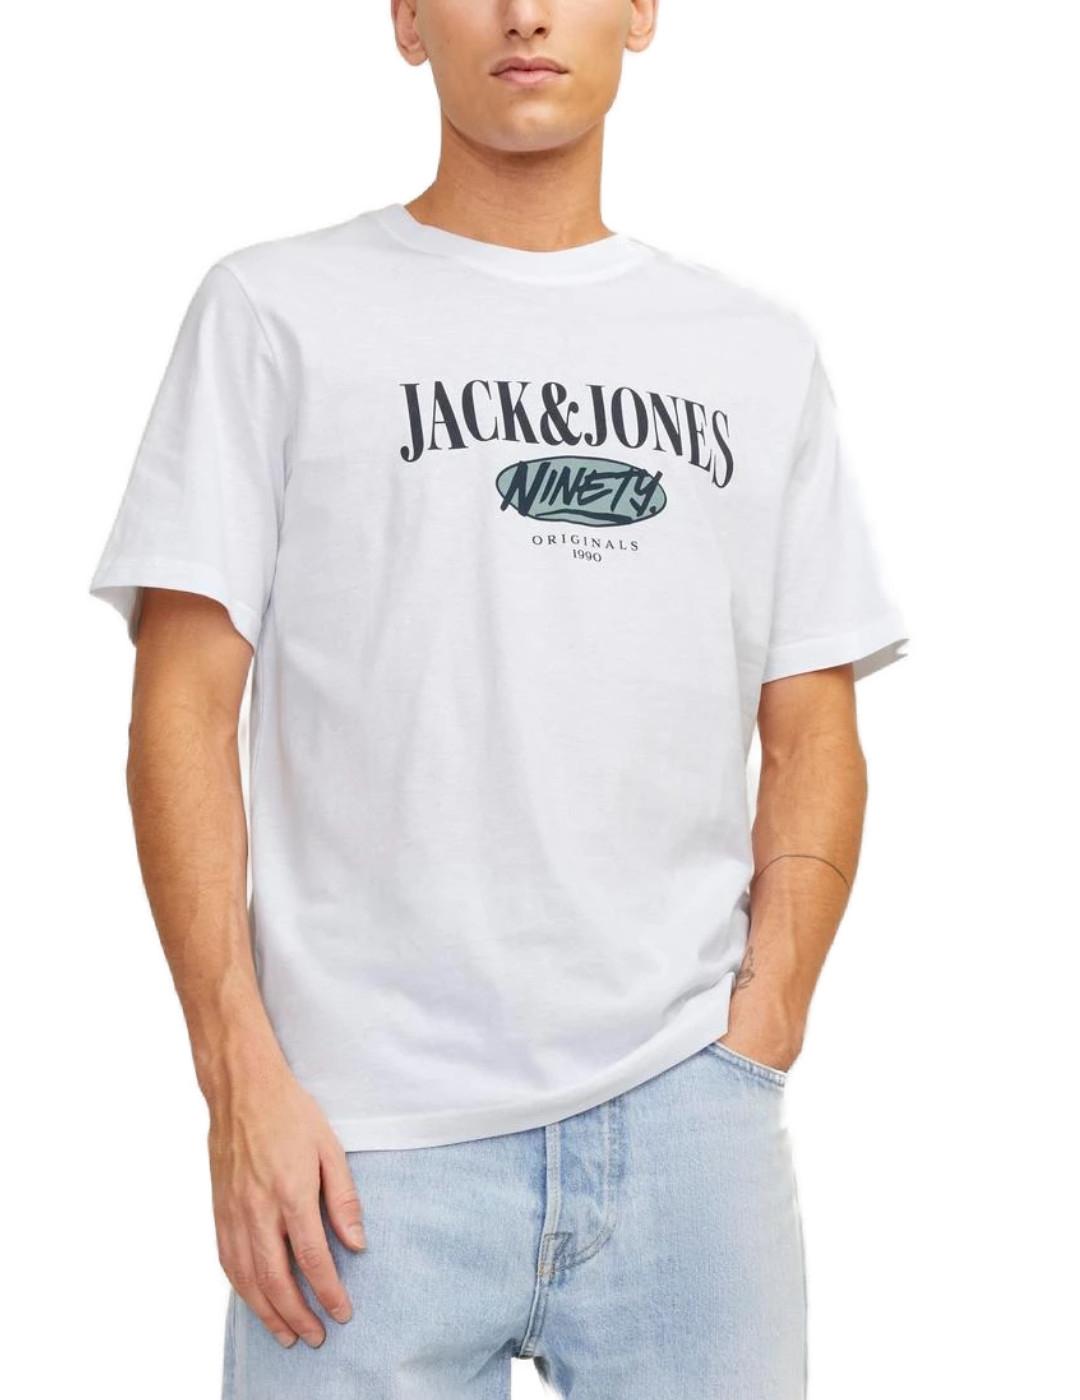 Camiseta Jack&Jones Cobin blanco manga corta para hombre